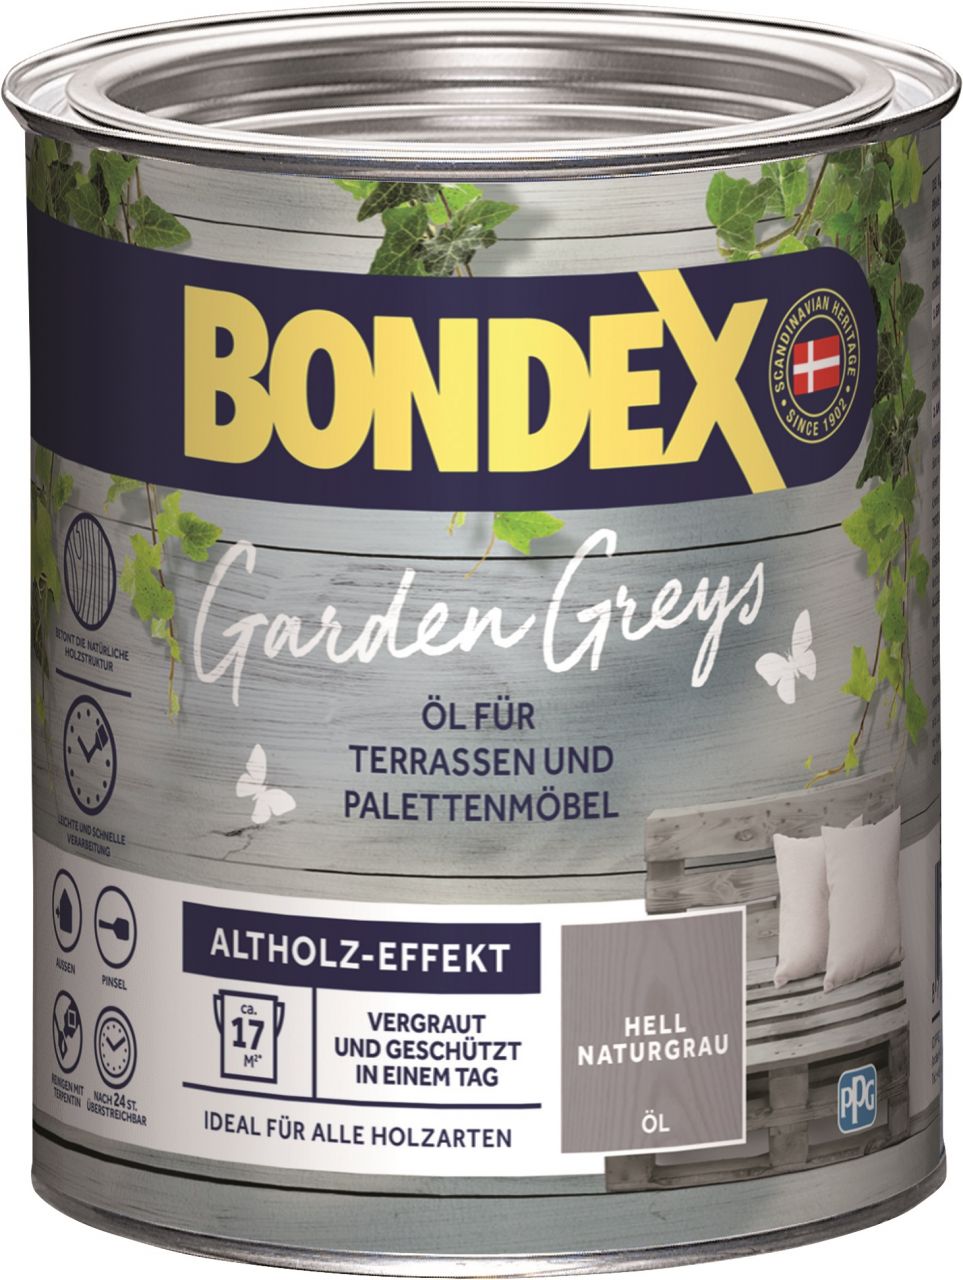 Bondex Garden Greys Öl 750 ml hell naturgrau von Bondex